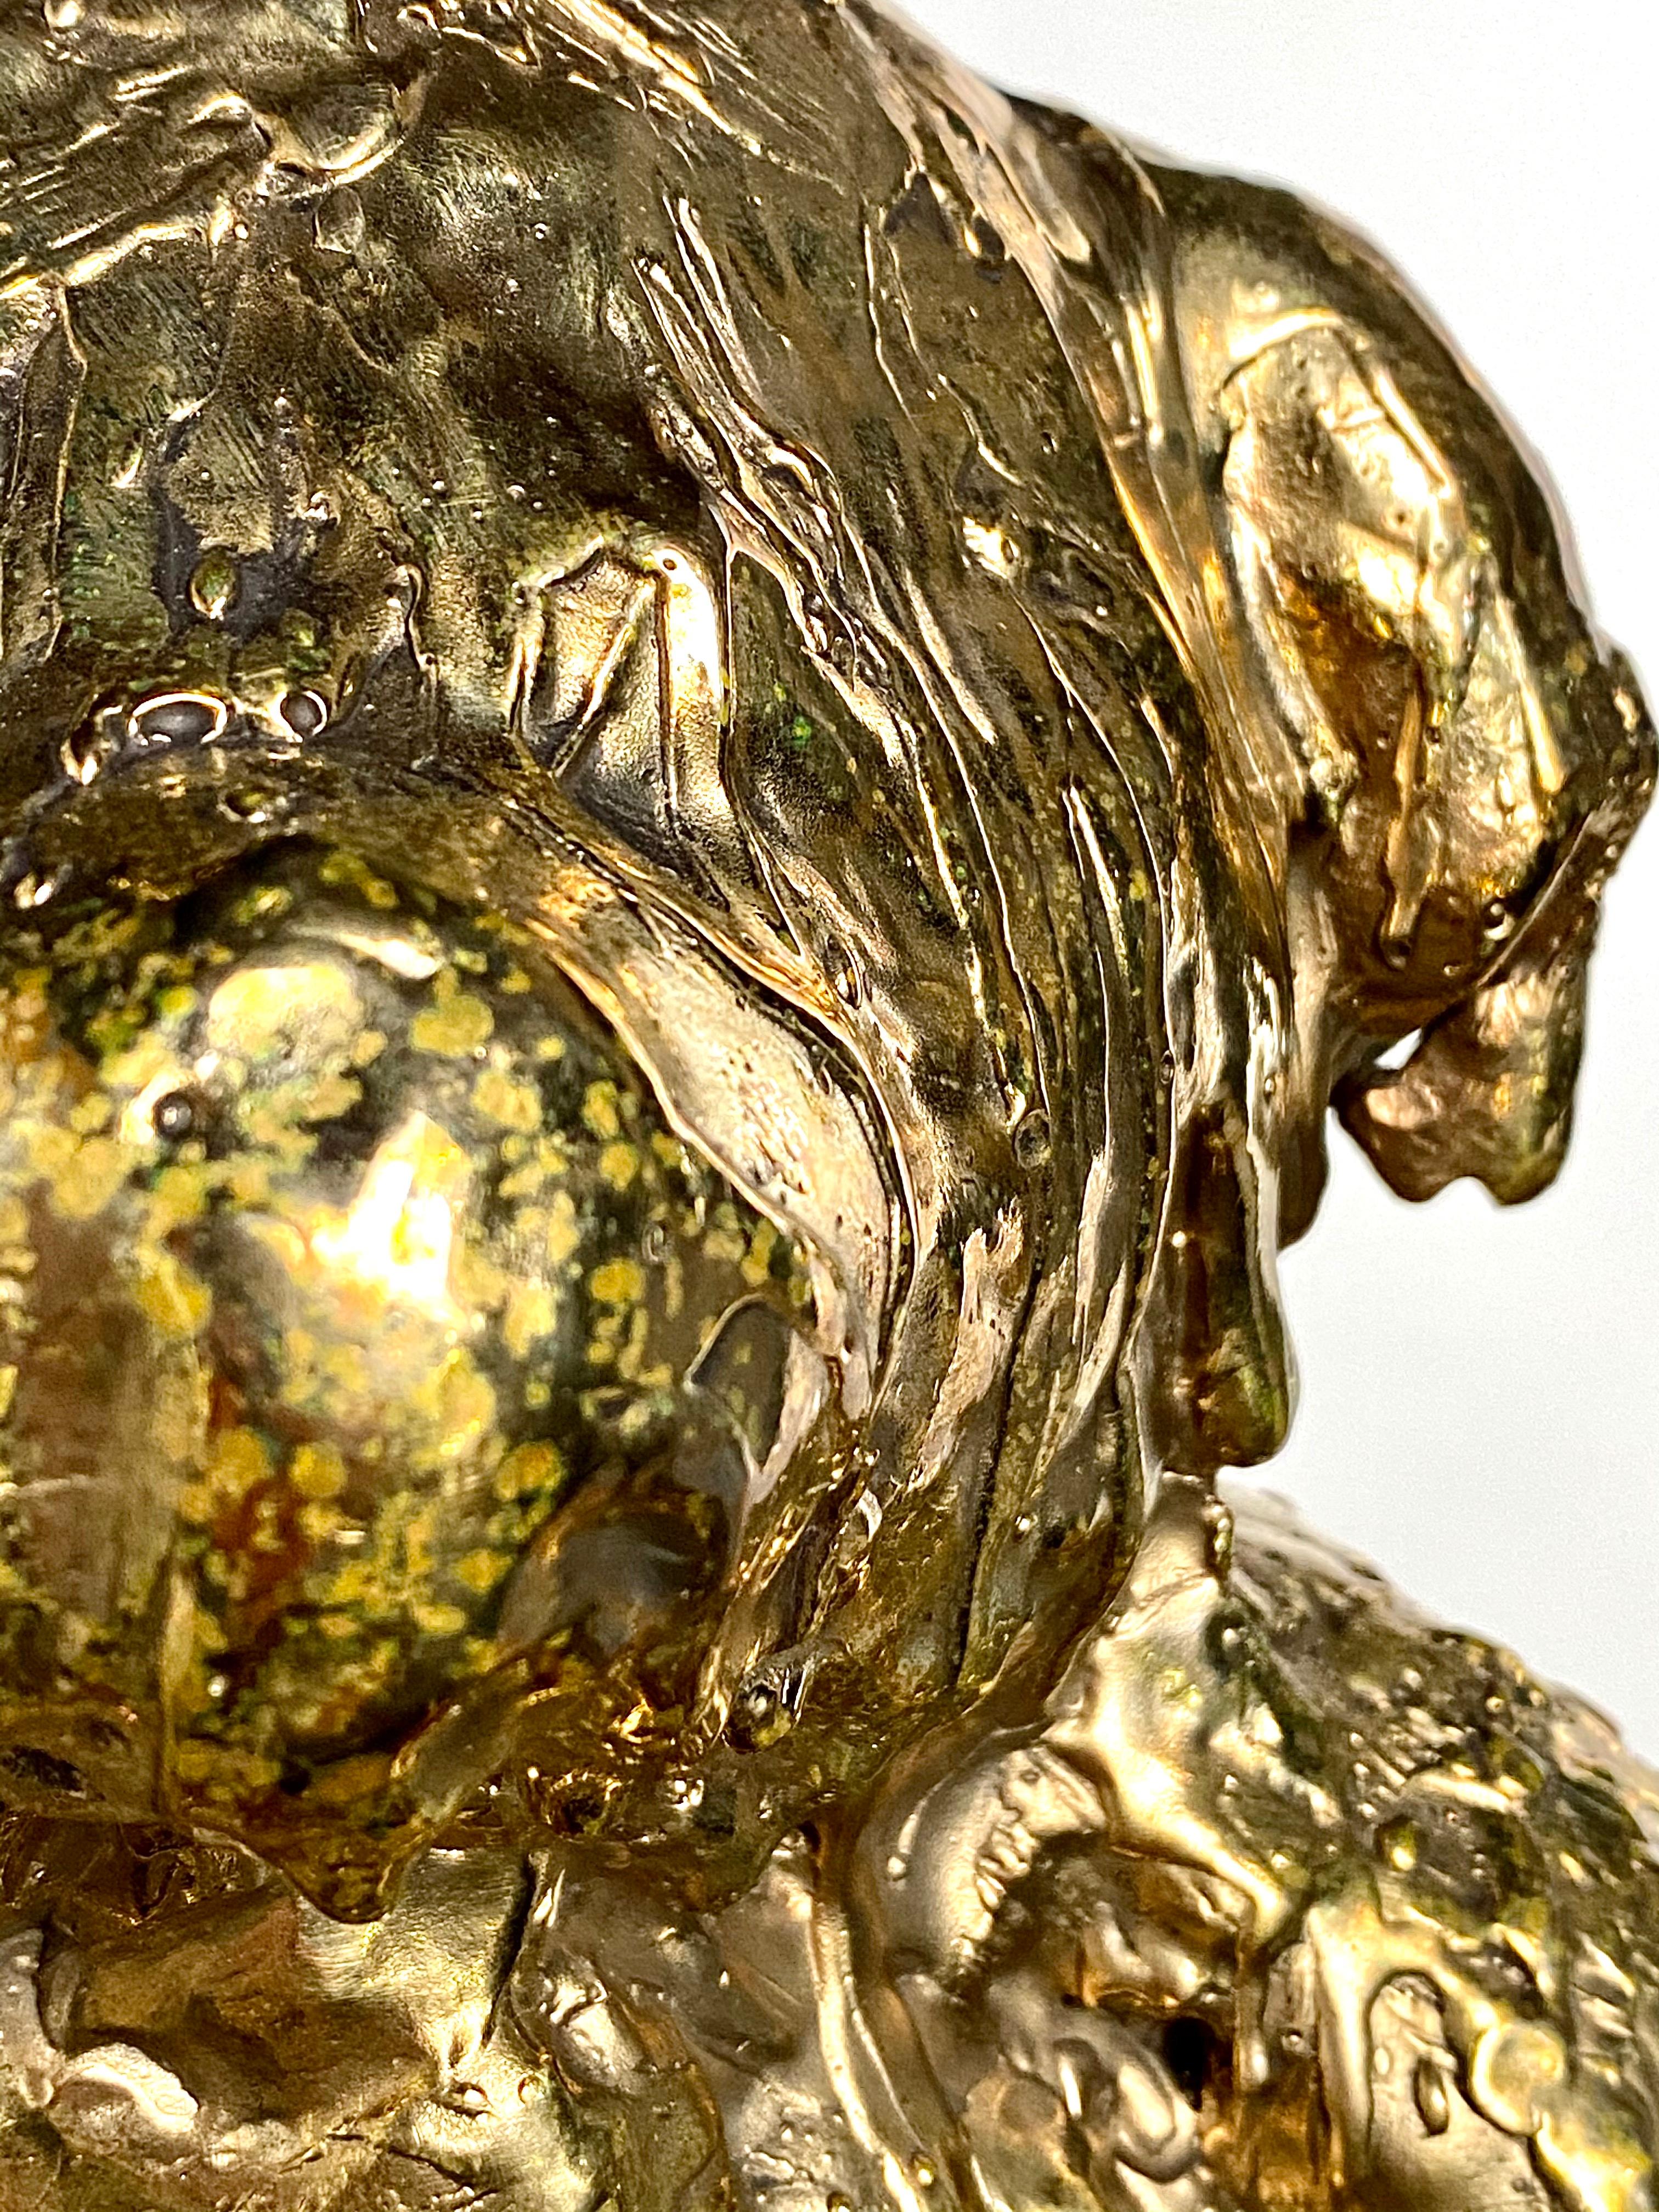 American Gold Sculptural Bronze Teddy Bear, 21st Century by Mattia Biagi For Sale